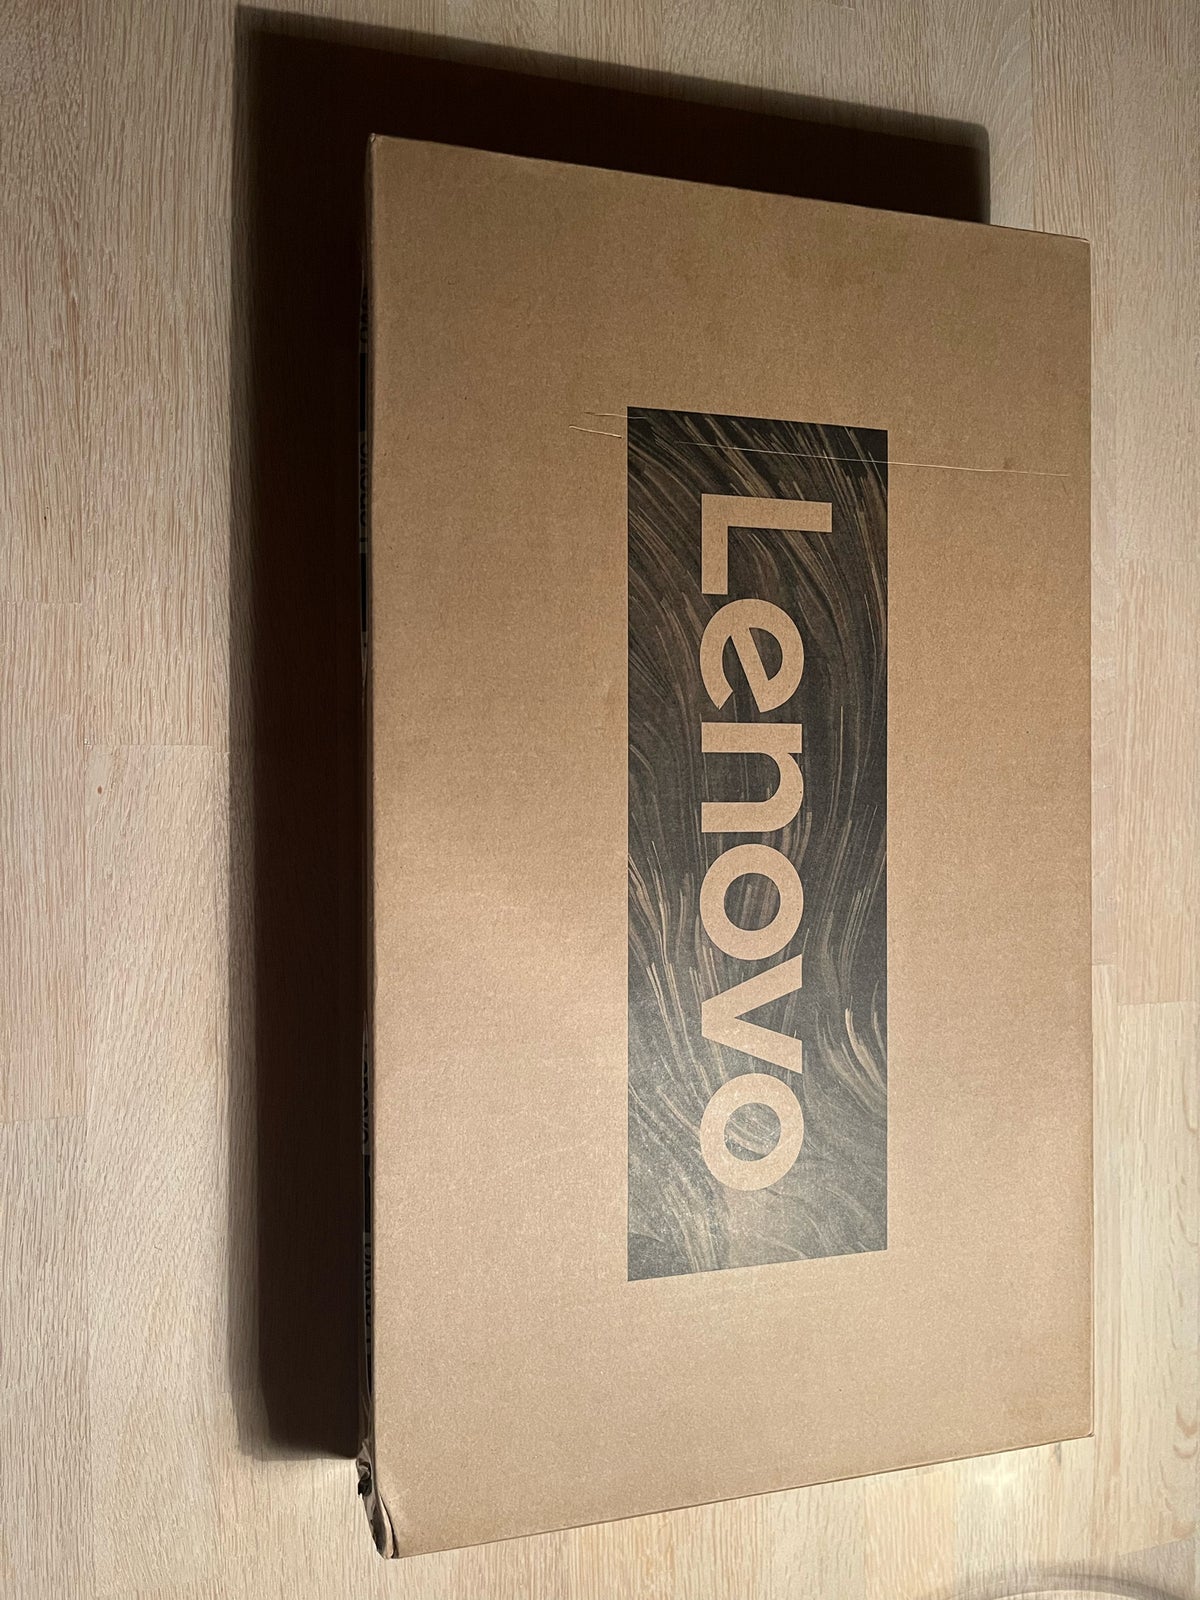 Lenovo ideapad 5, 2,4 GHz, 250 GB harddisk